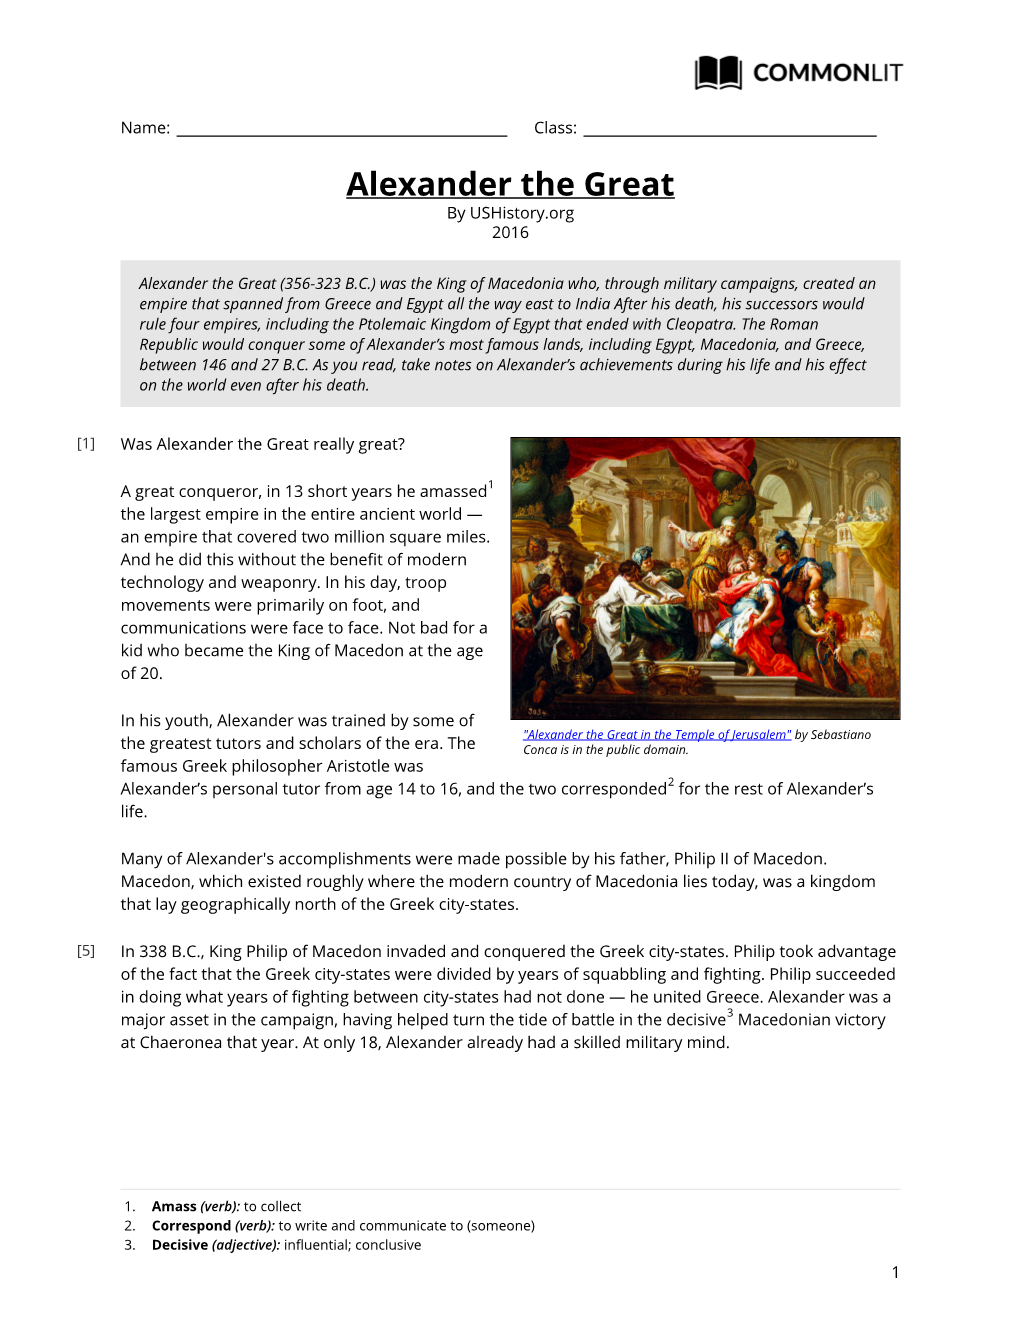 Commonlit | Alexander the Great